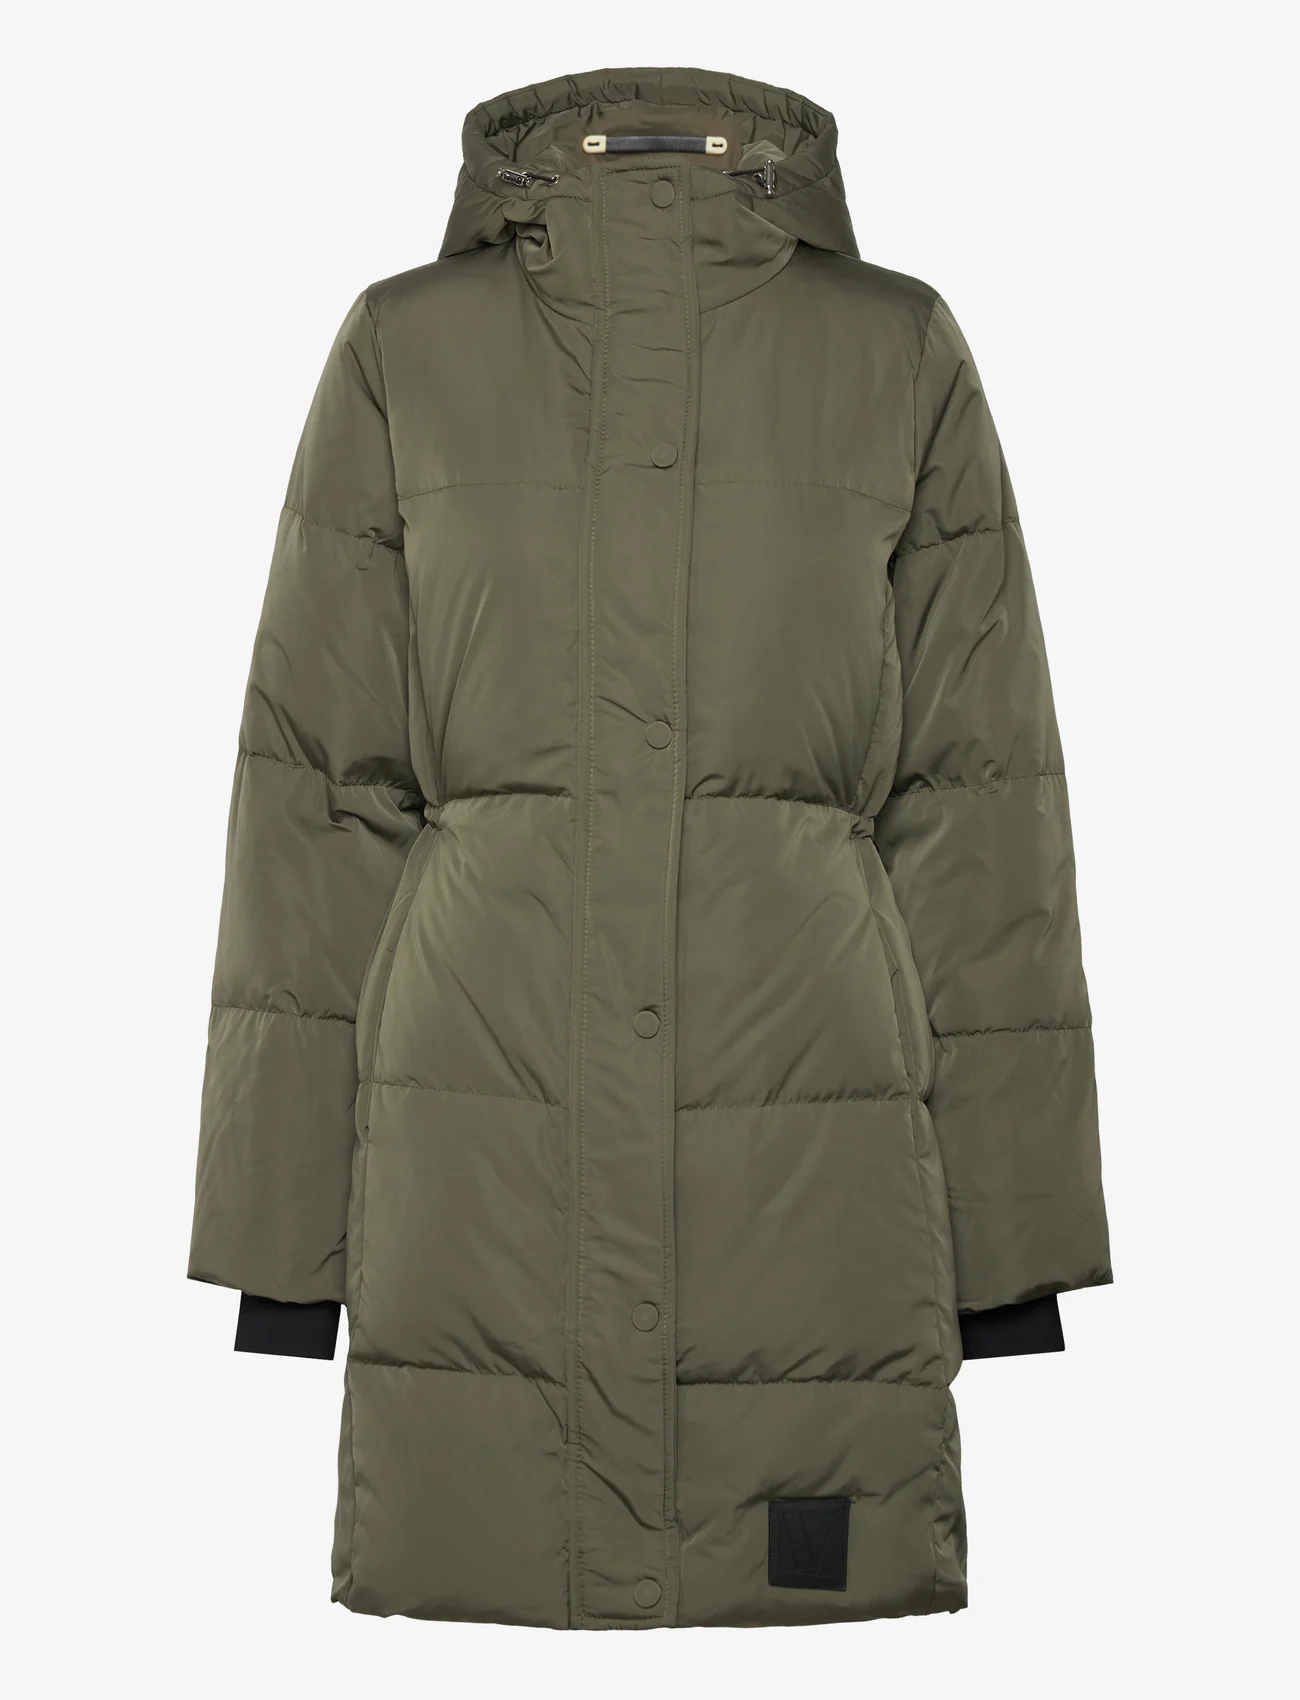 InWear - PhyllysIW Classic Coat - winter coats - beetle green - 0